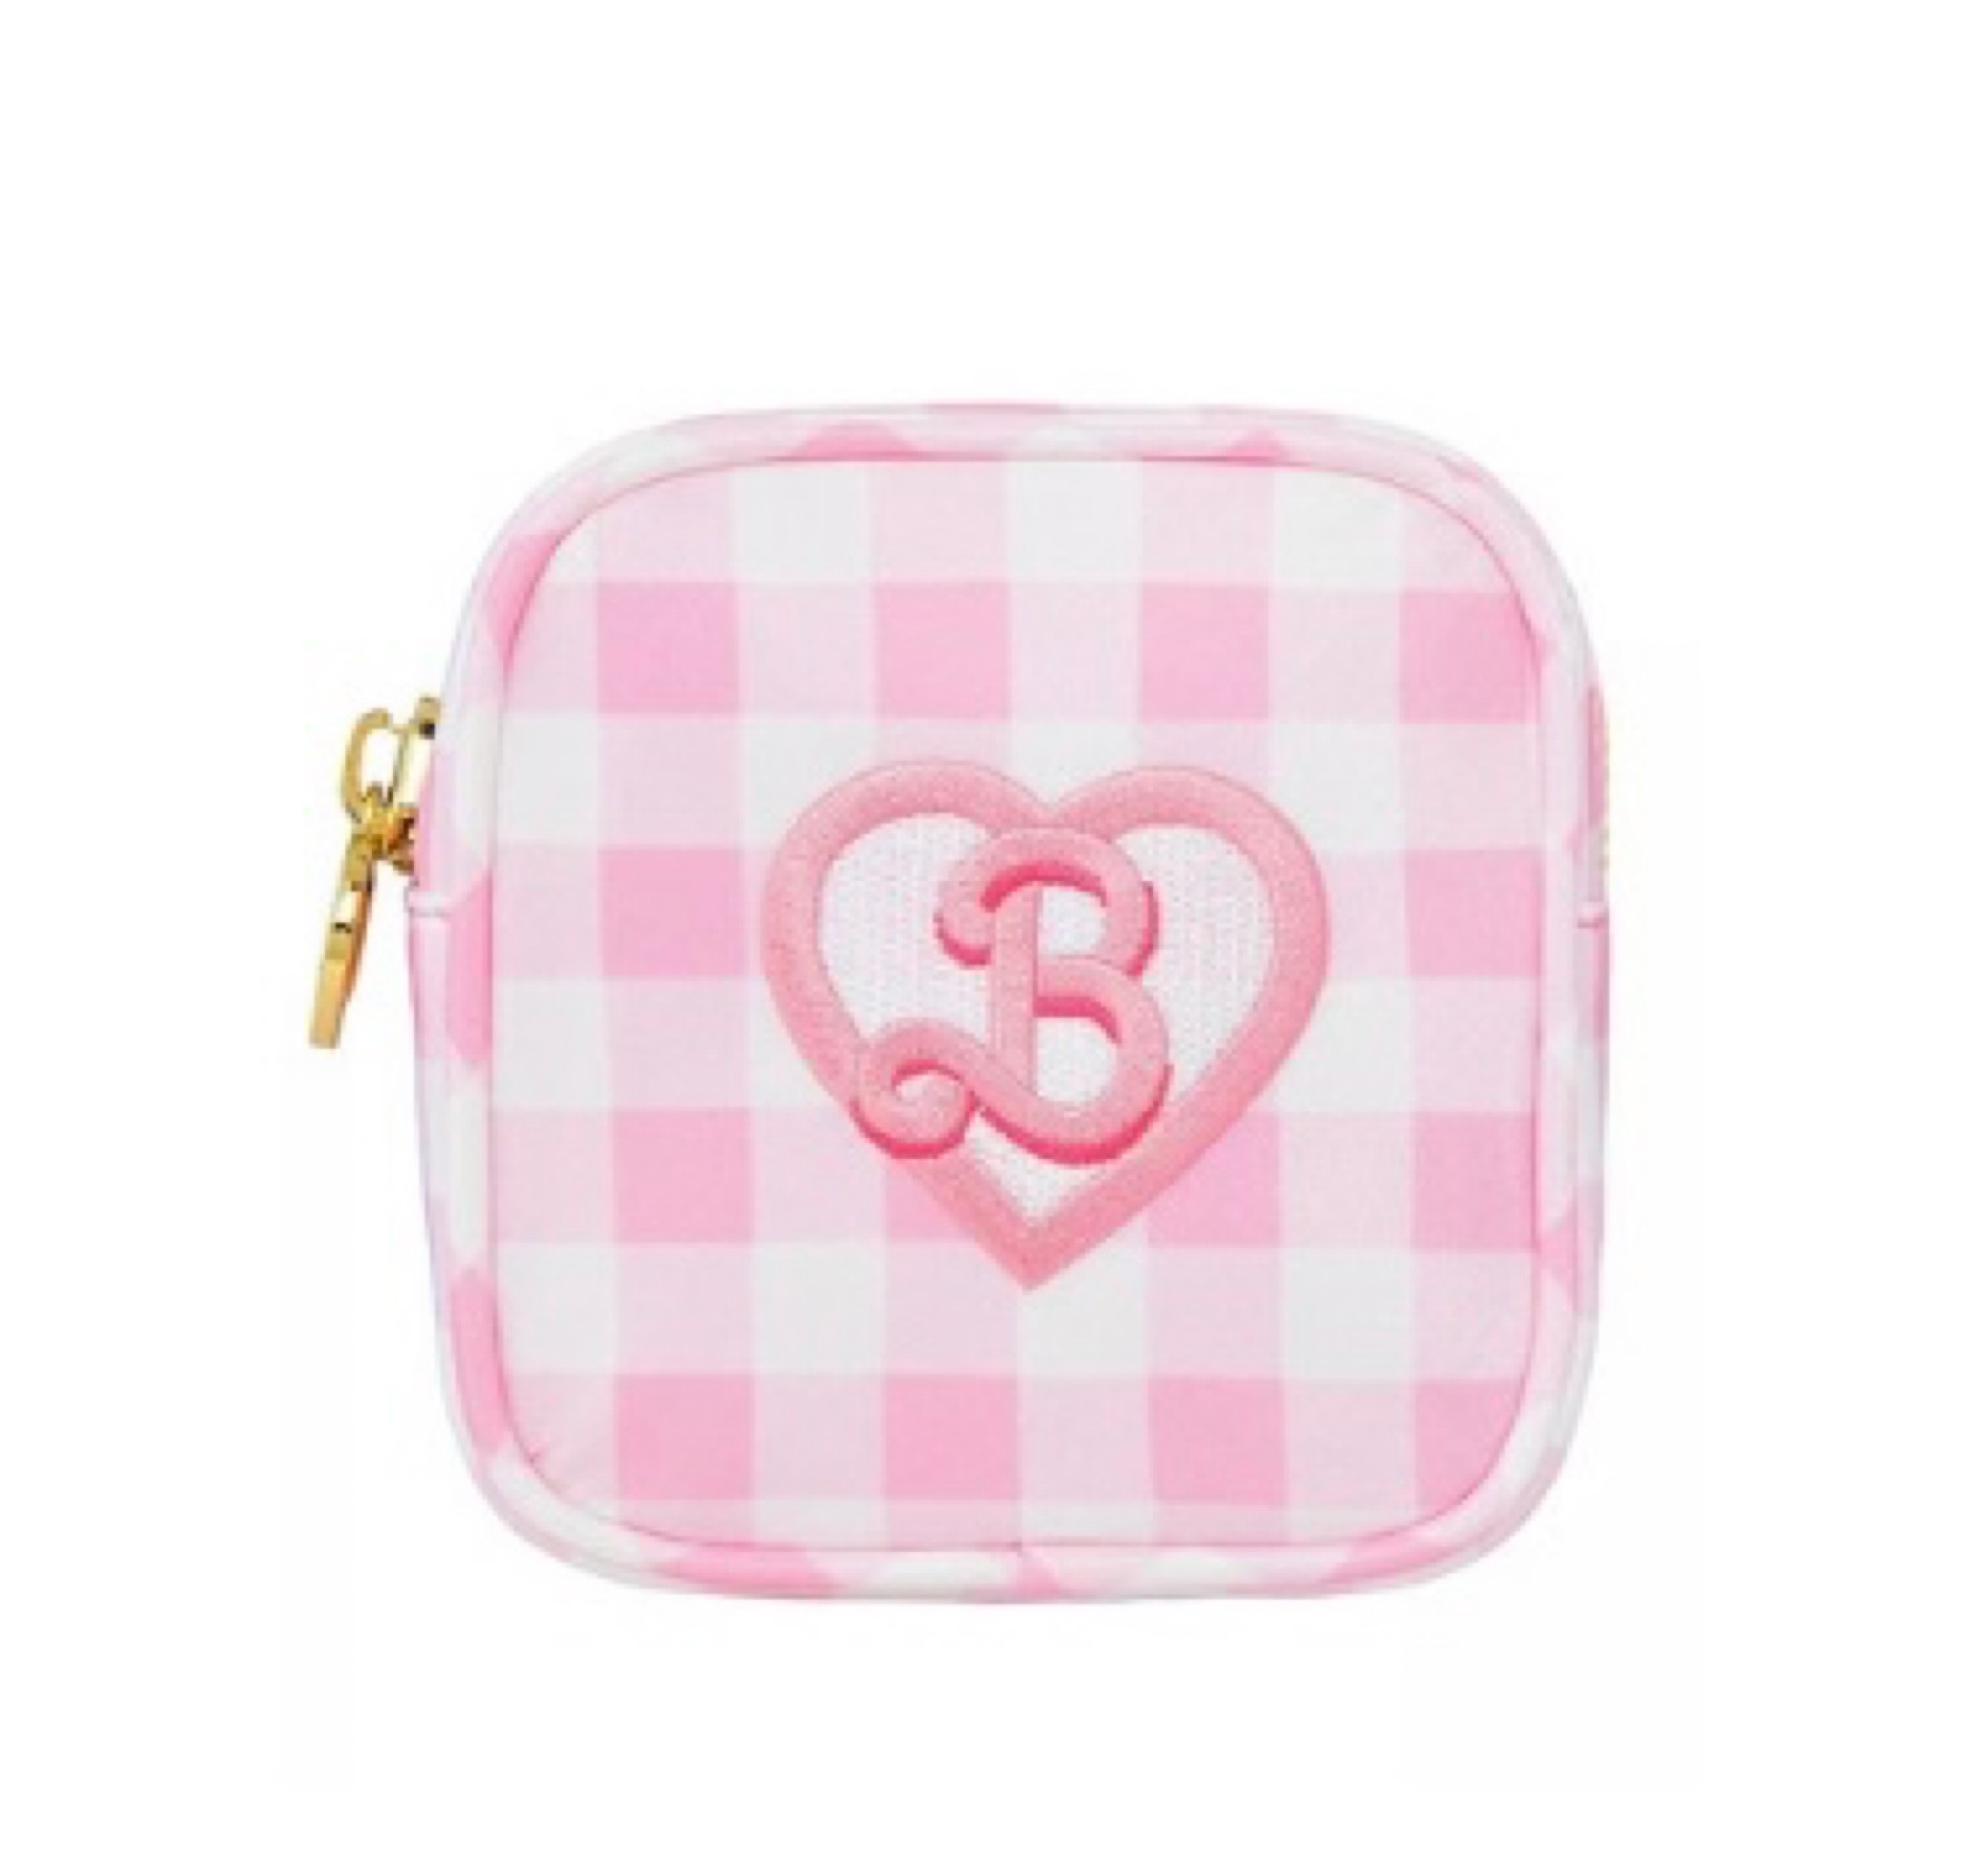 Cute Barbie Hello Kitty Heart Decoration Black Shoulder Bag